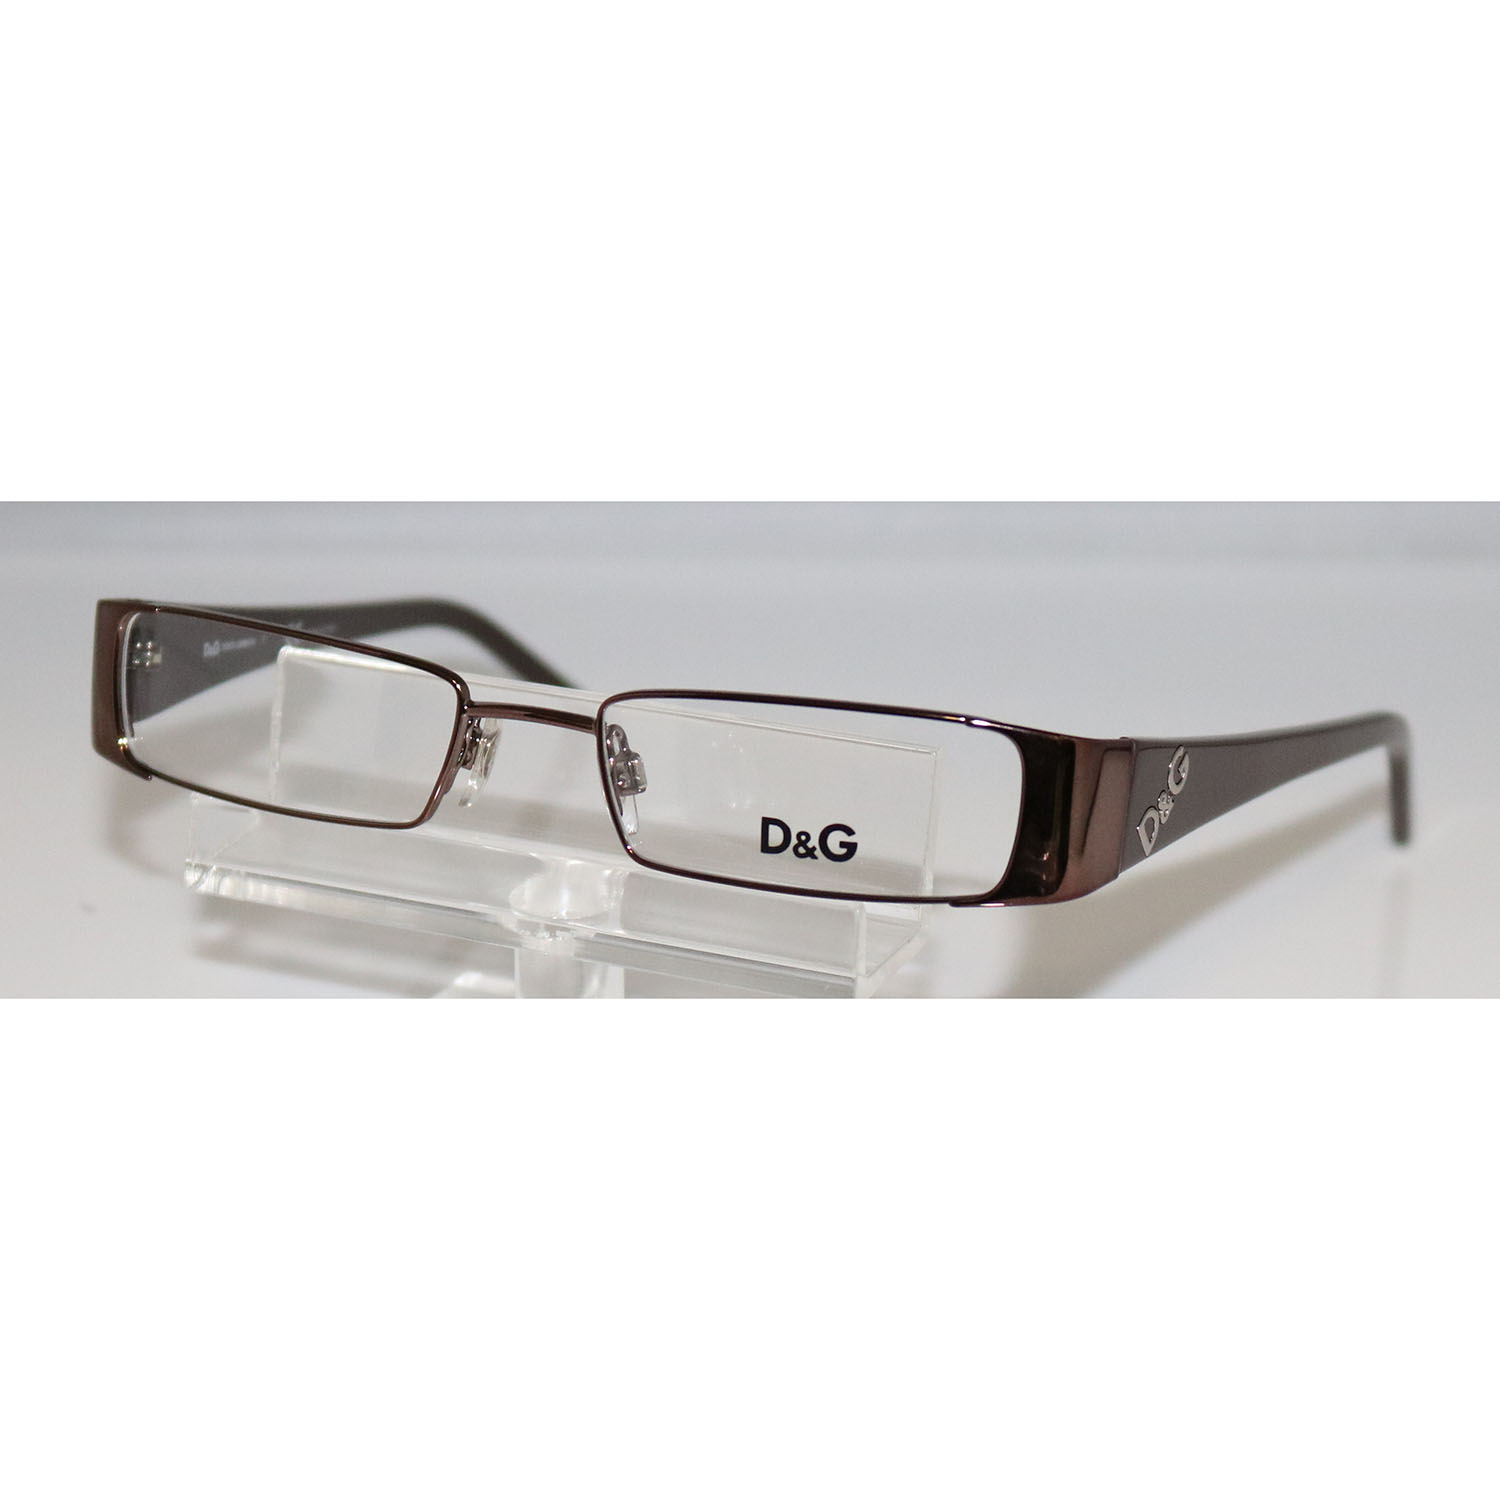 d & g glasses